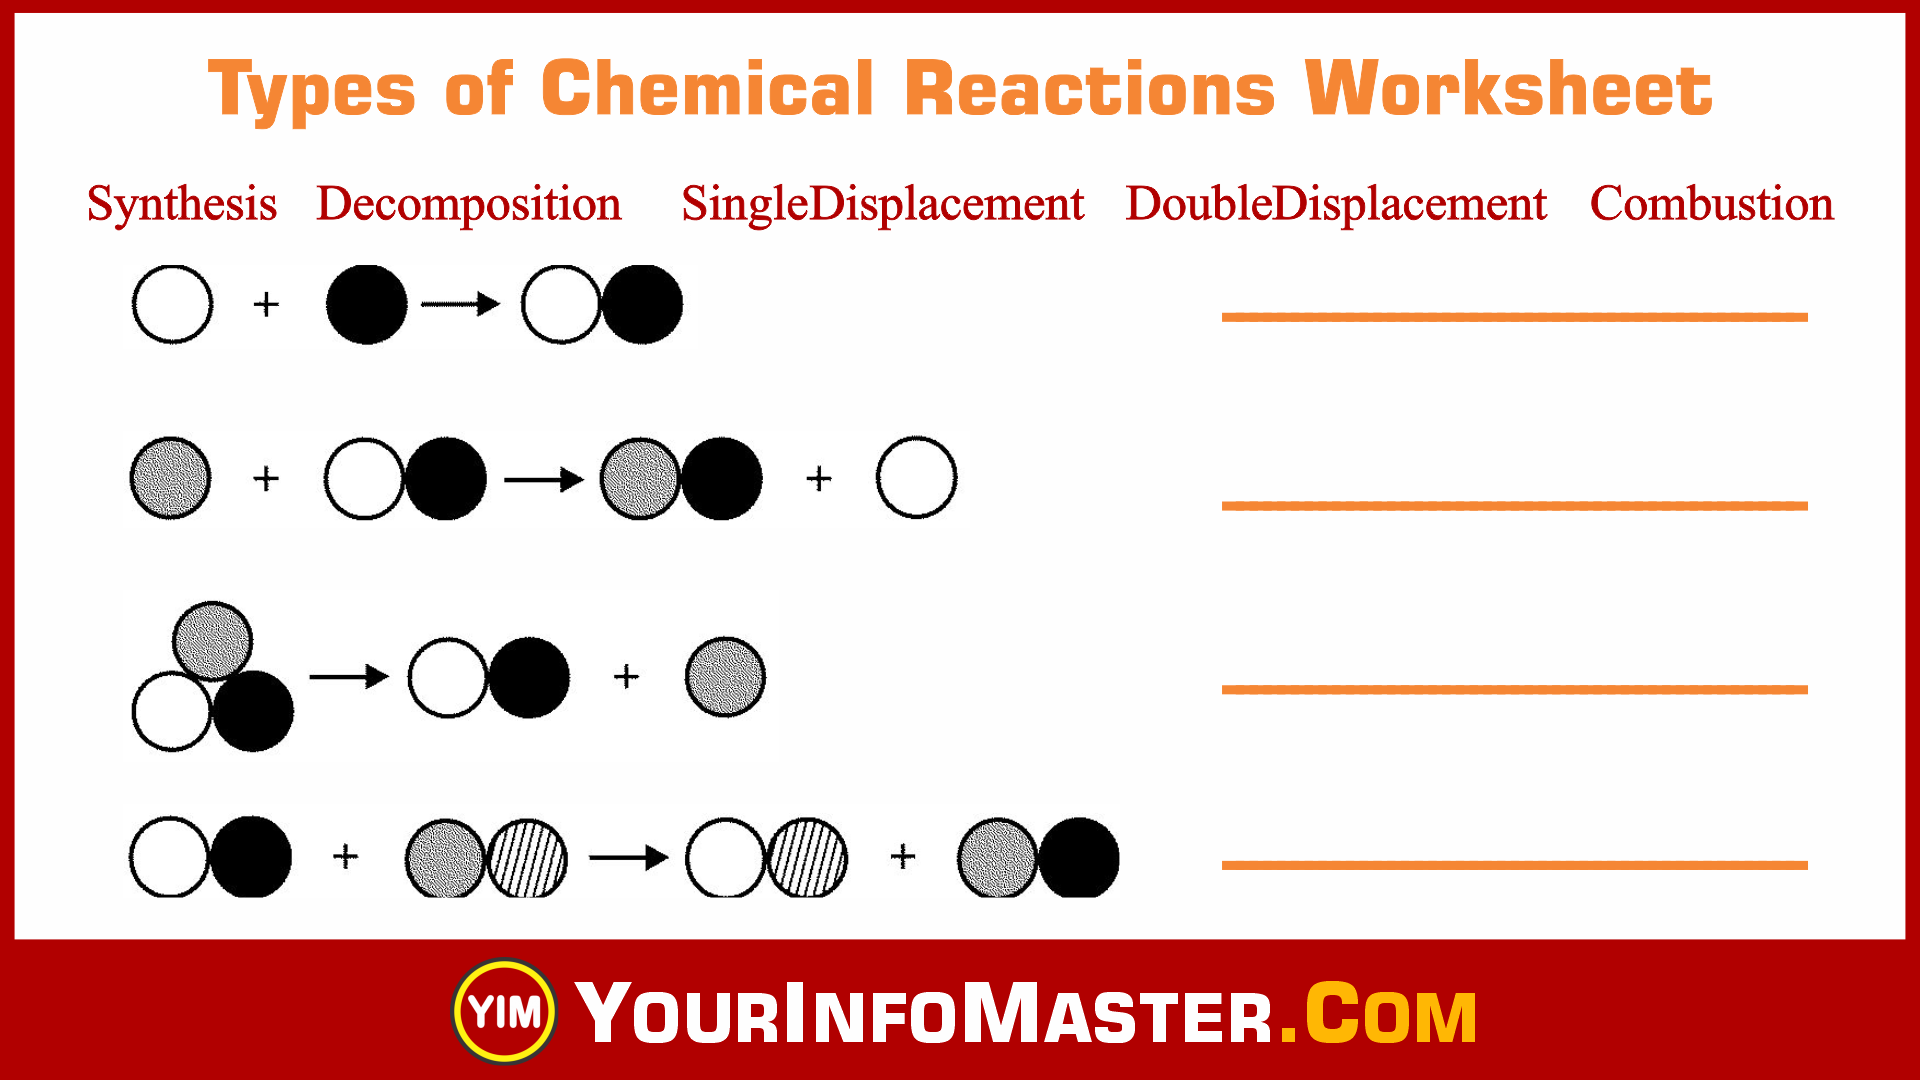 Chemistry Worksheets, Free Worksheets pdf, Types of Chemical Reactions Worksheet, Worksheet